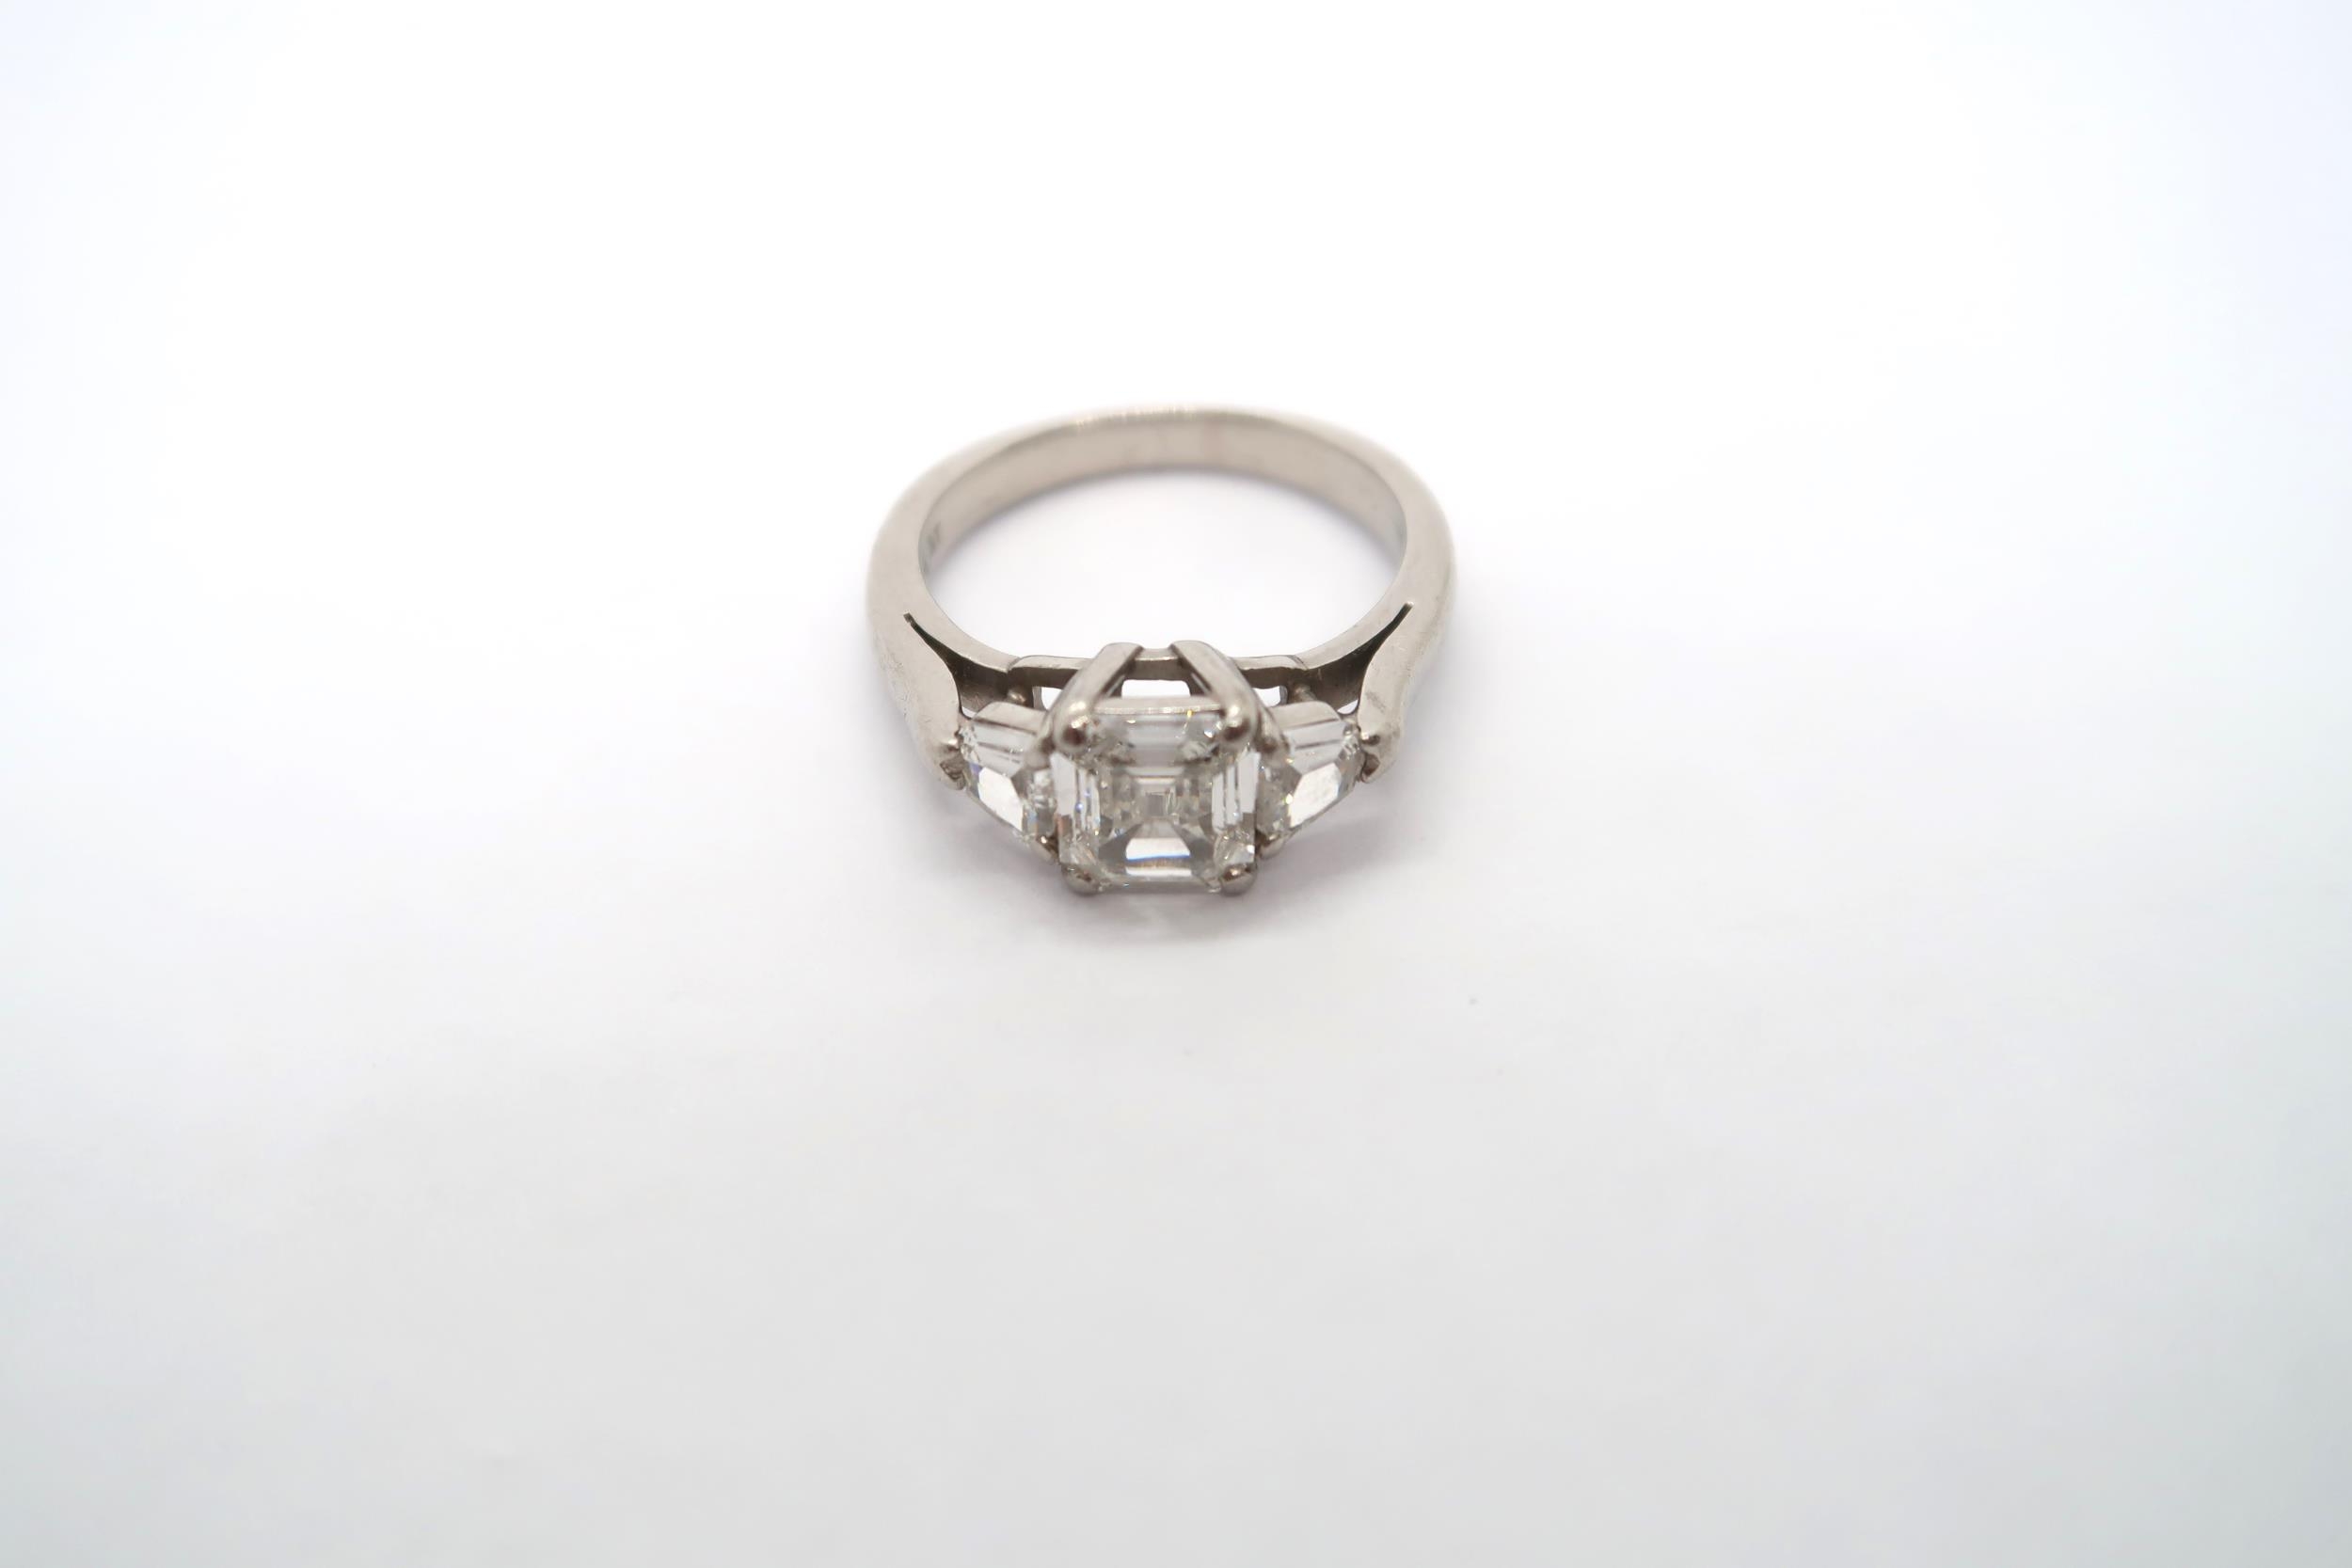 A very good platinum three stone diamond ring - The square emerald cut diamond estimated 1.1ct - Image 6 of 11